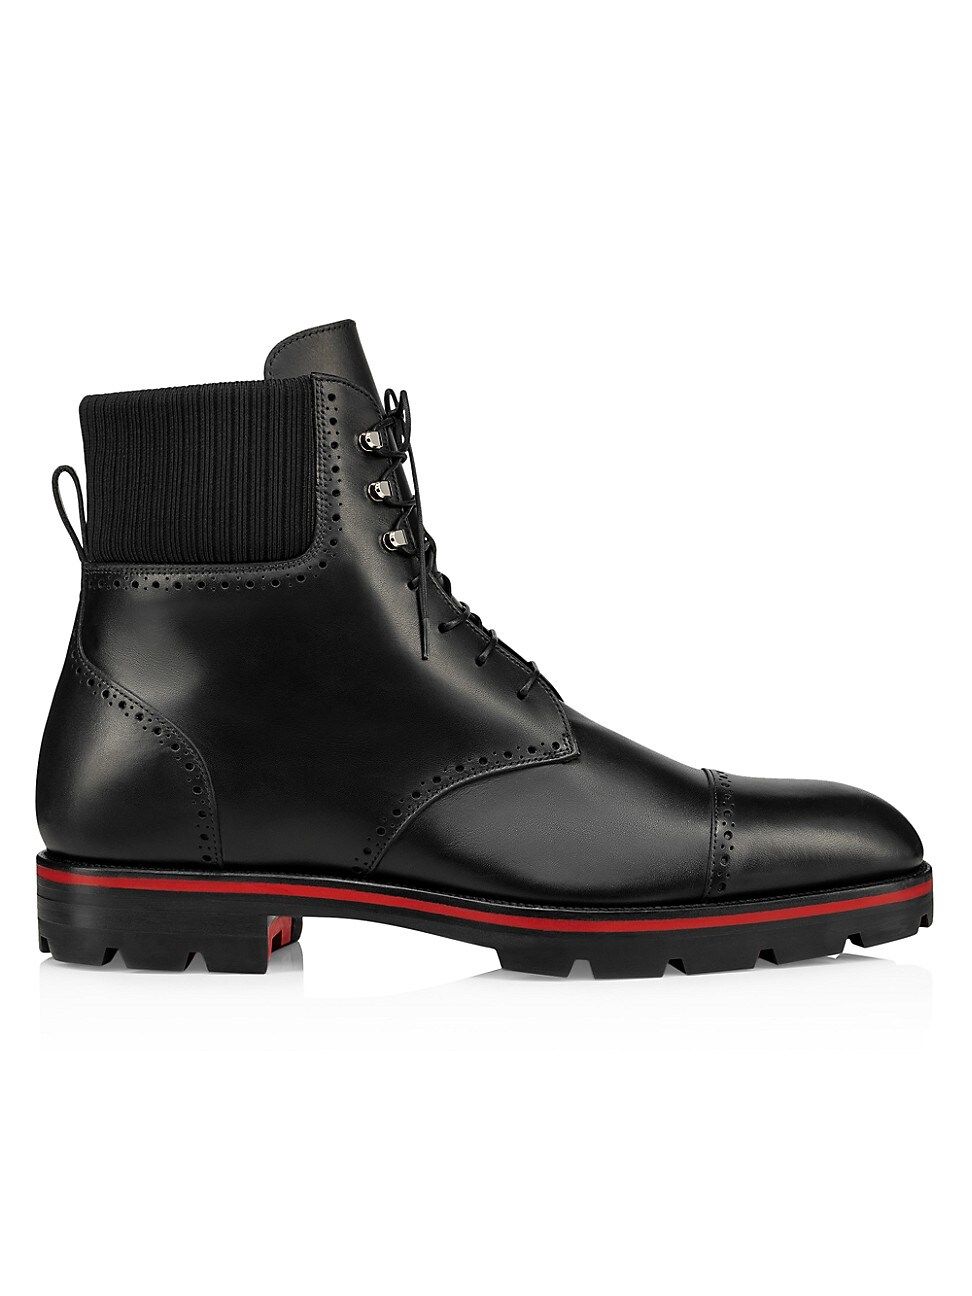 Christian Louboutin Men's City Leather Lasercut Combat Boots - Black - Size 40 (7) | Saks Fifth Avenue